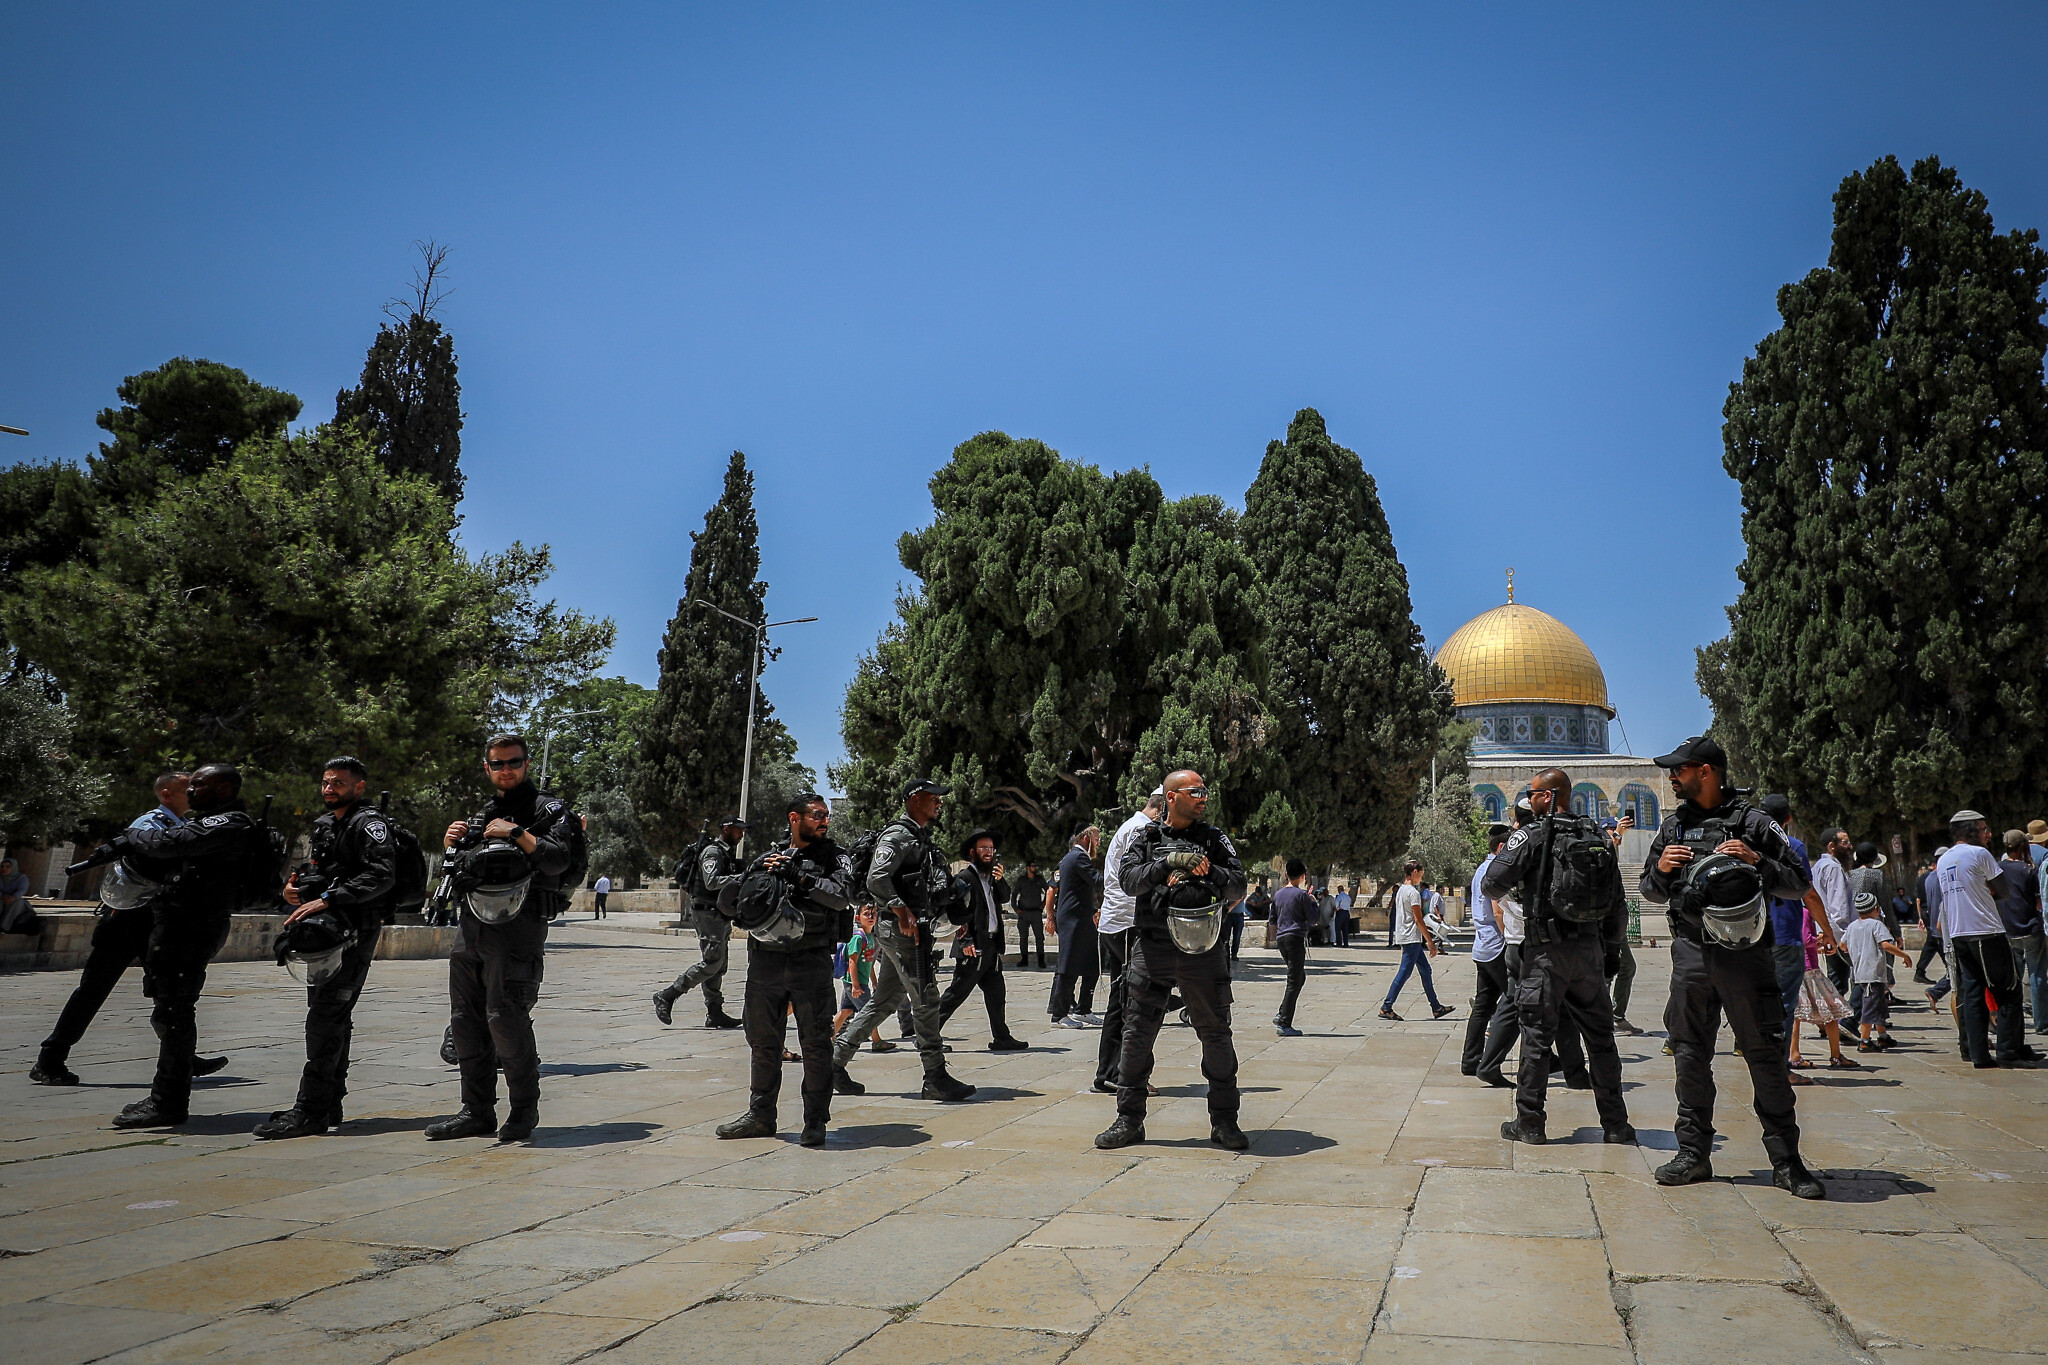 Jordan, Egypt, Turkey all condemn Jewish visits Temple on Tisha B'Av | The Times of Israel